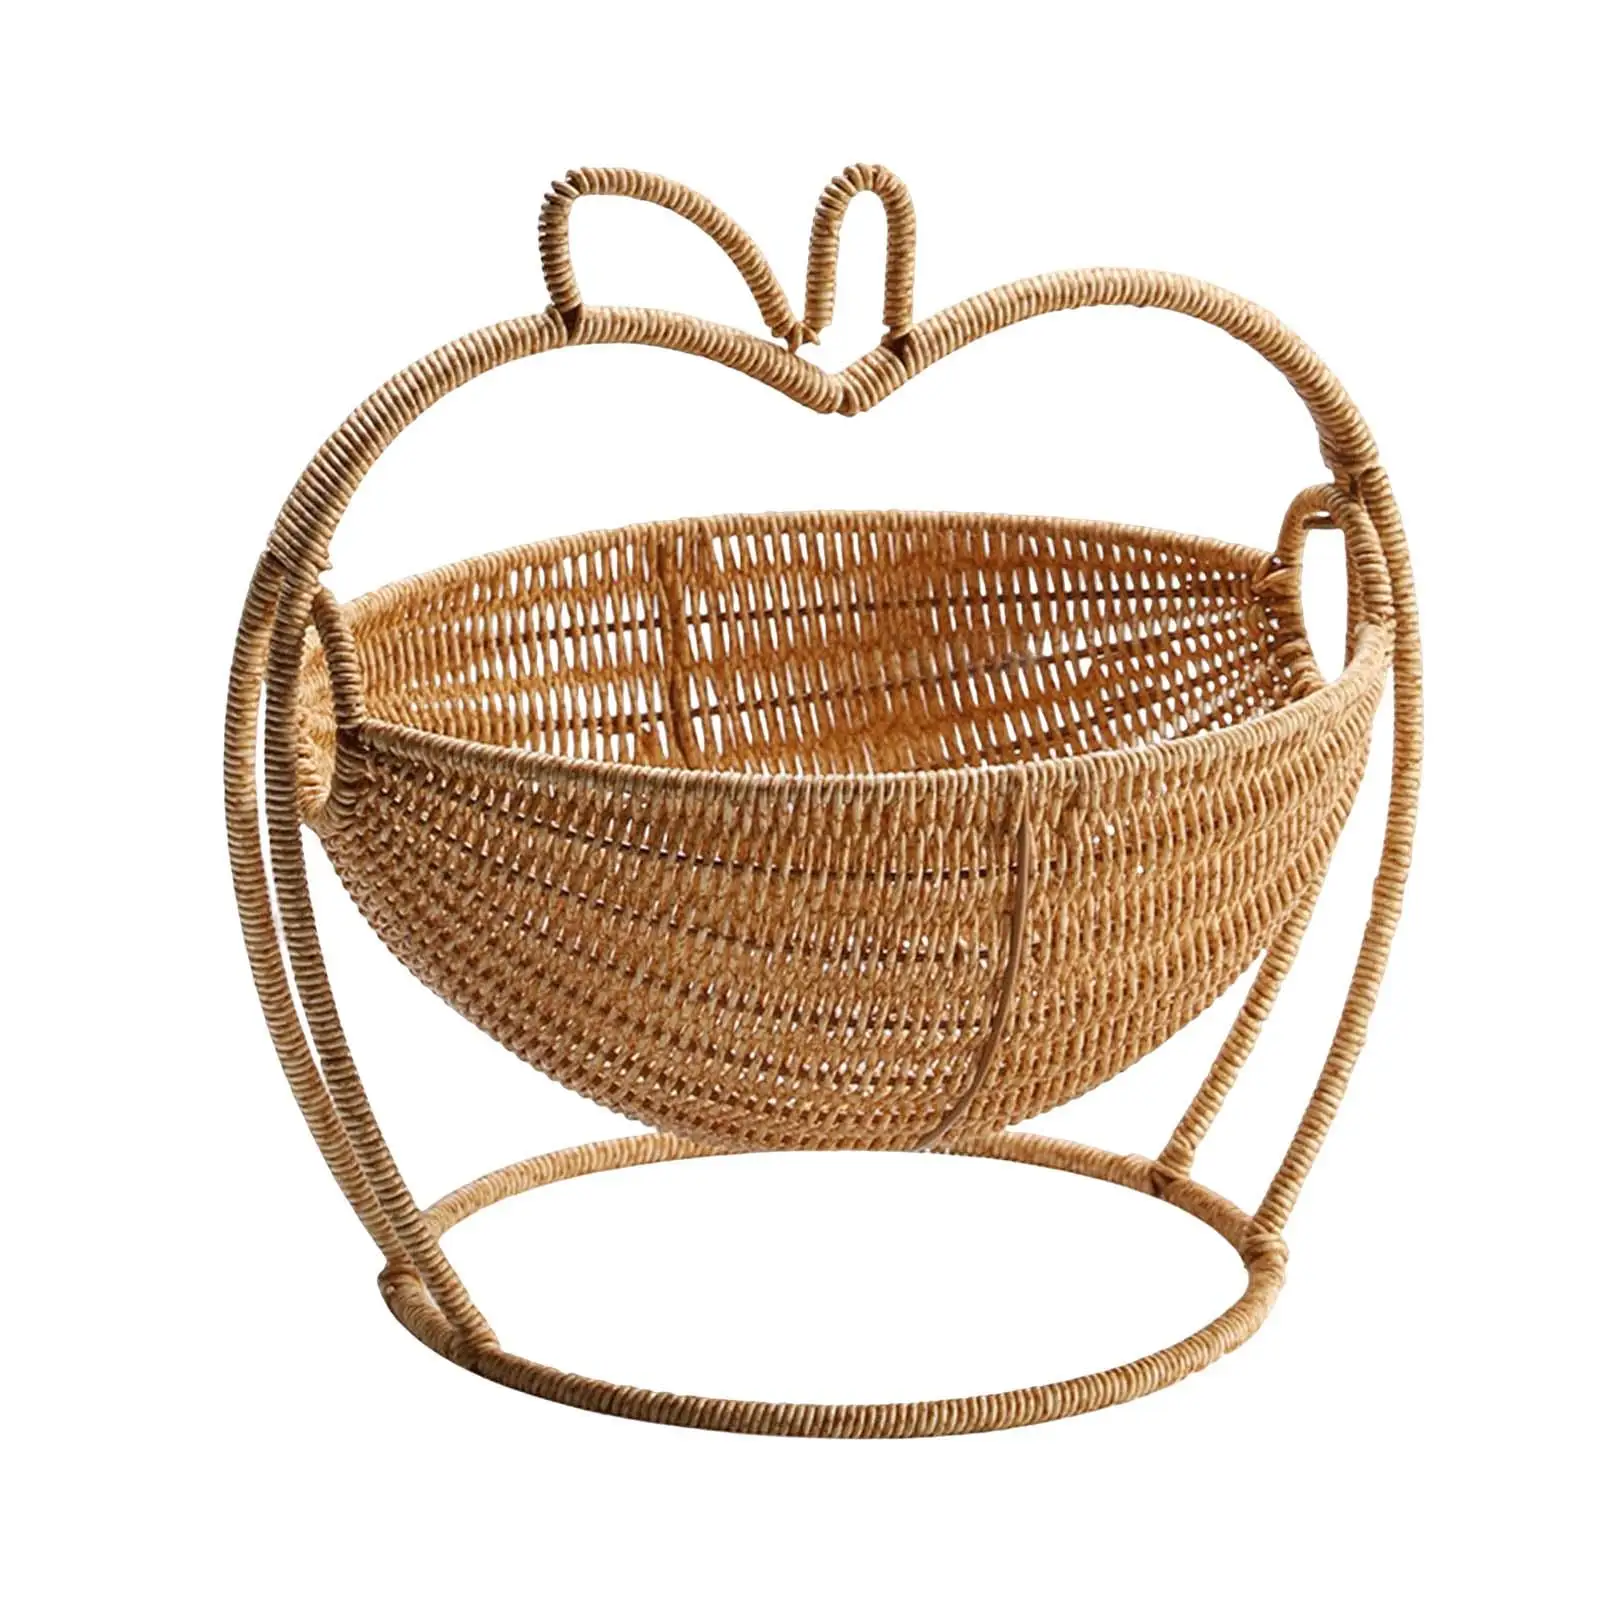 Woven Fruit Basket Rattan Breakfast Basket Decor for Kitchen home kitchen Parties